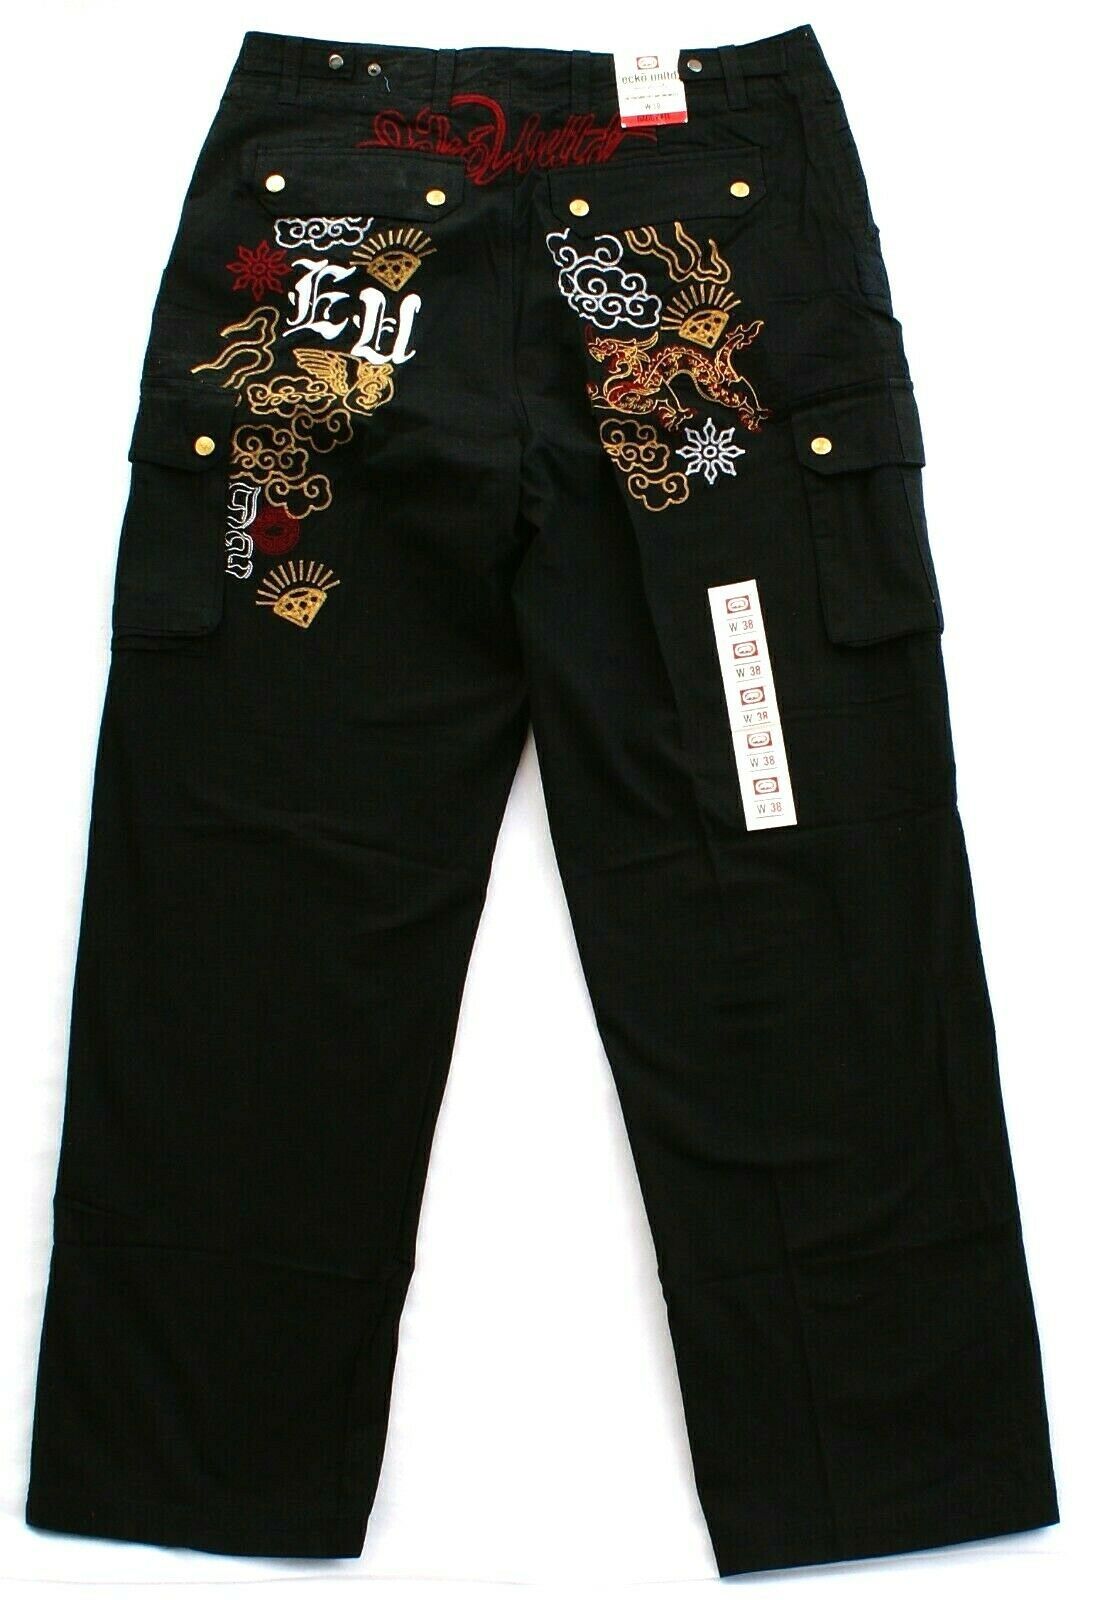 Ecko Unltd. Black Embroidered Twill Baggy Fit Cargo Pants Men's NWT - Pants